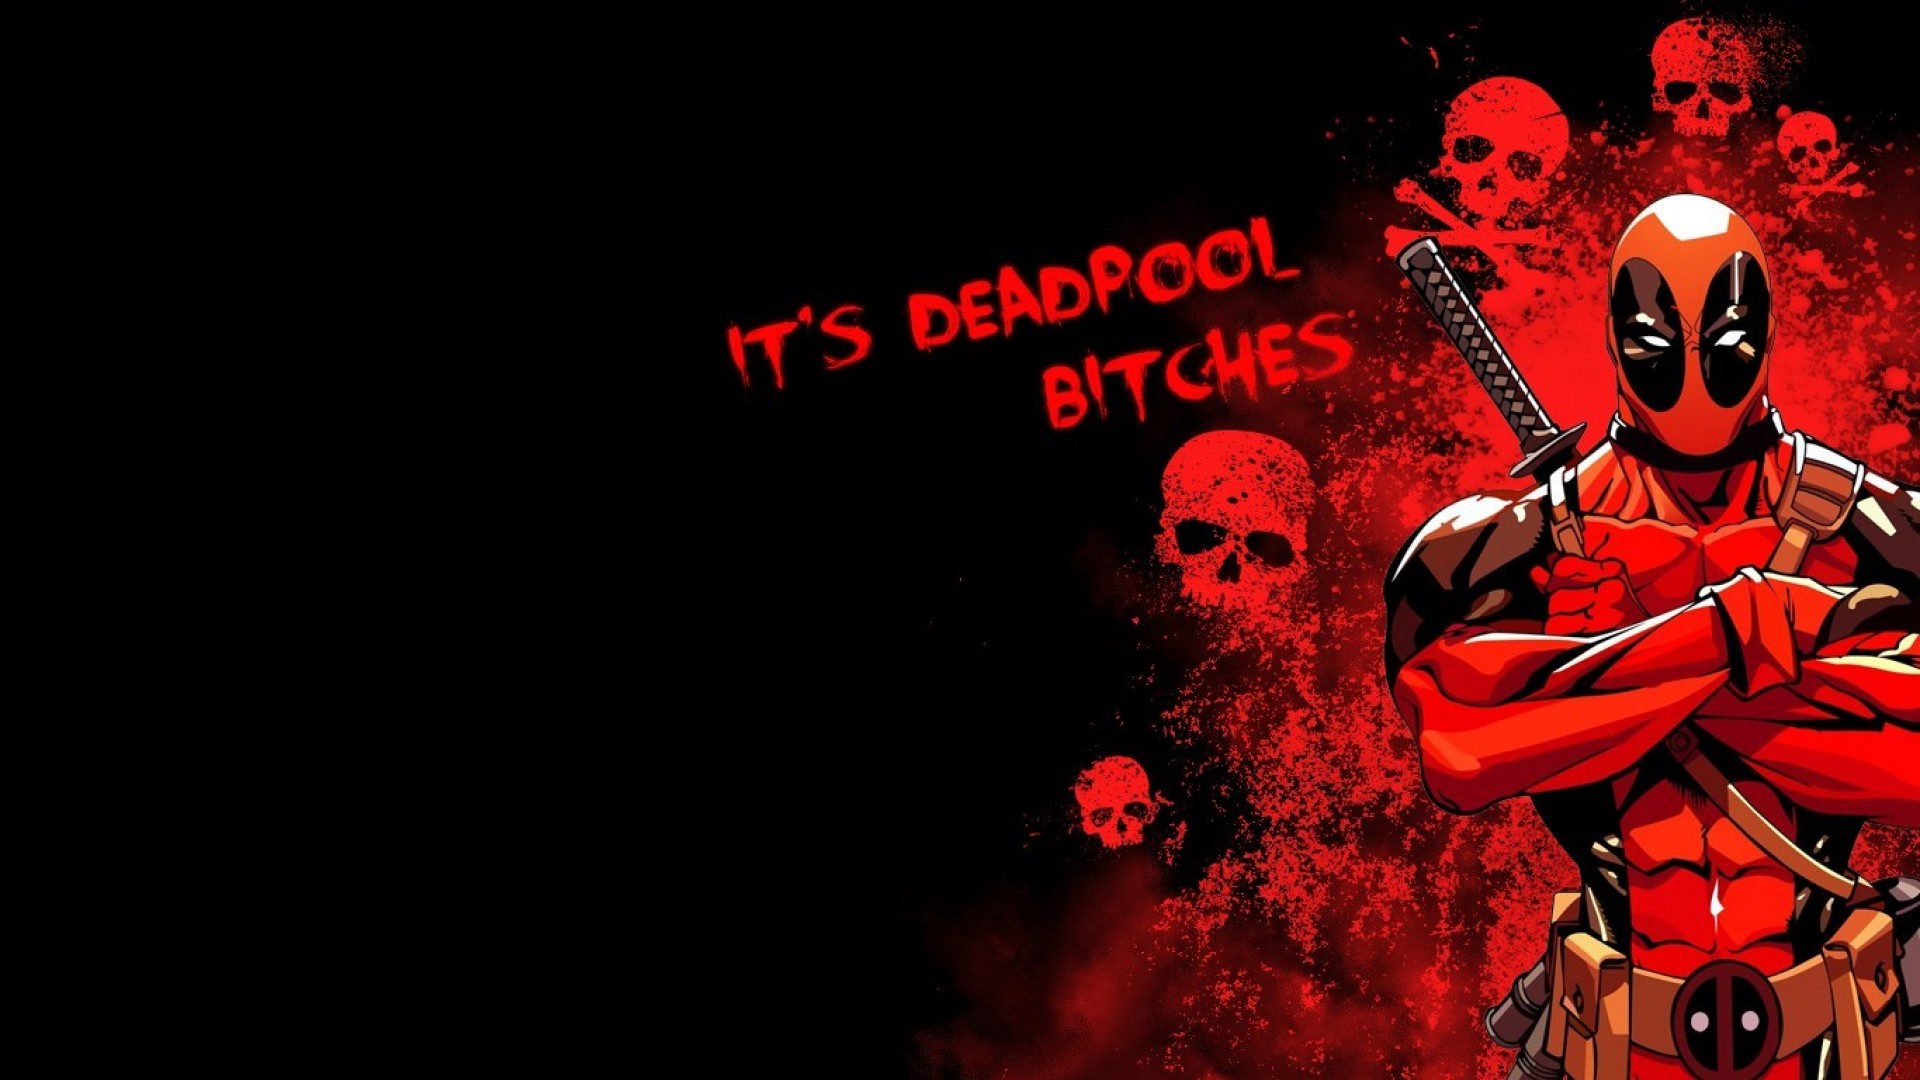 Alpha Coders Ics Deadpool